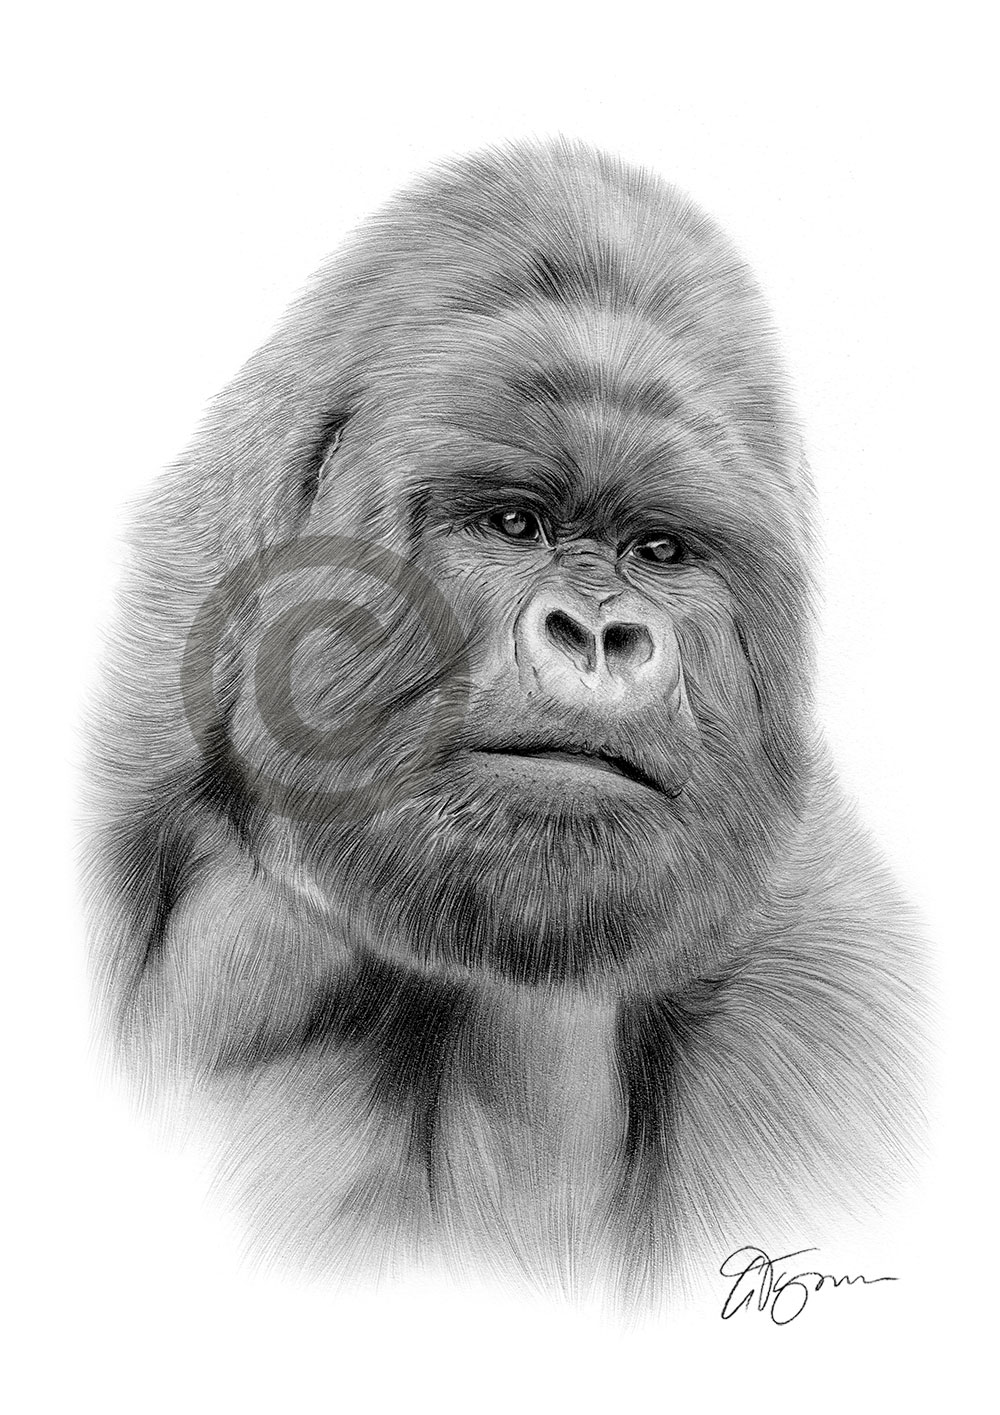 Pencil drawing of a silverback gorilla by UK artist Gary Tymon